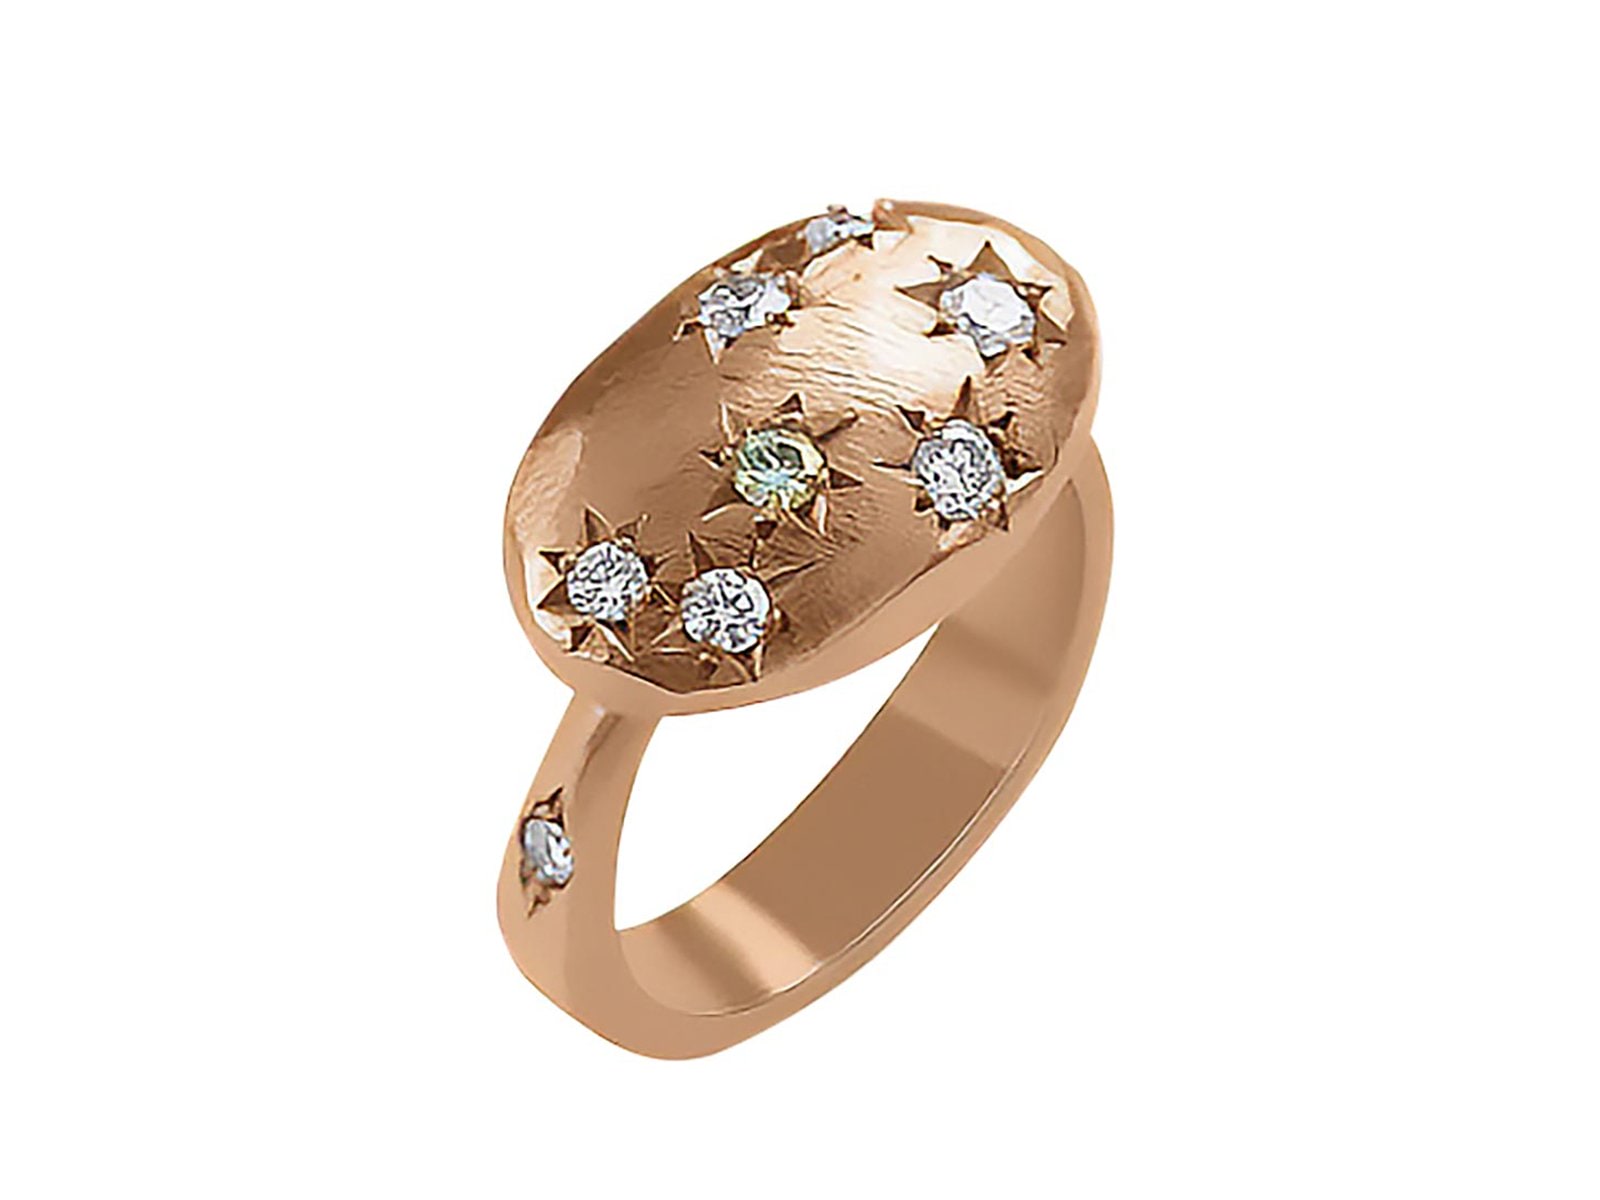 Debra Fallowfield Matariki ring with rose gold finish and embedded diamonds 